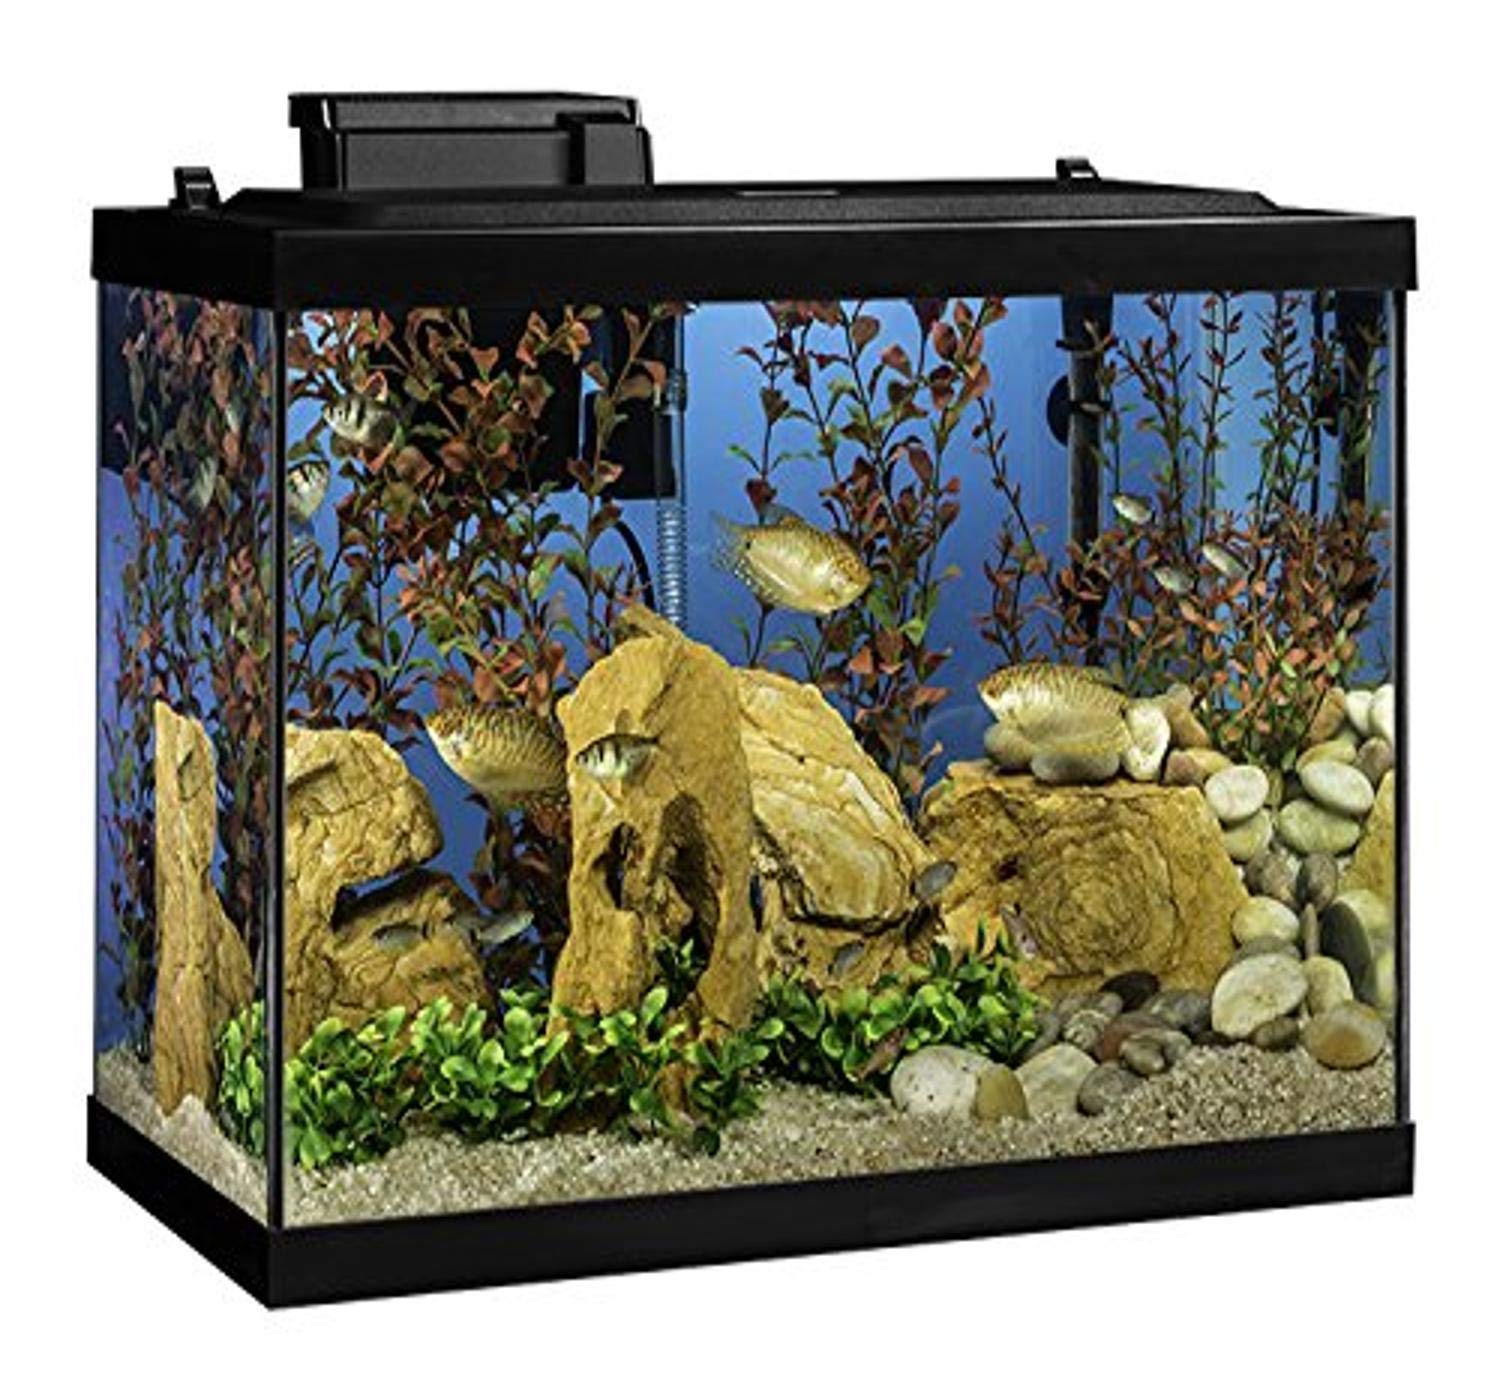 Tetra Aquarium 20 Gallon Fish Tank Kit